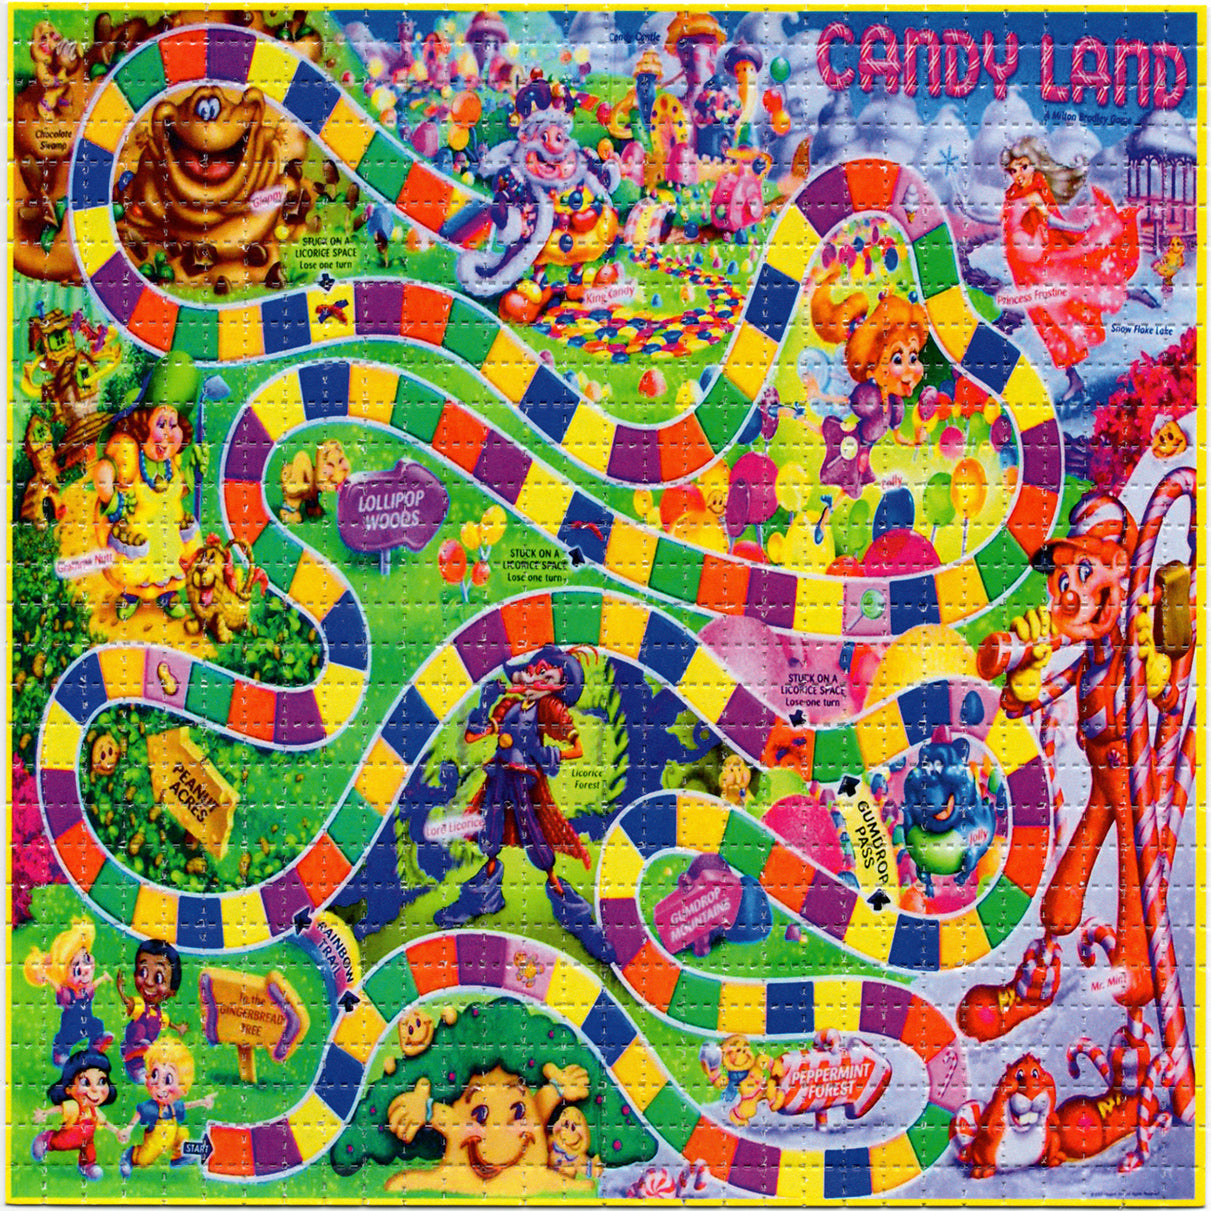 Land of Candy LSD blotter art print